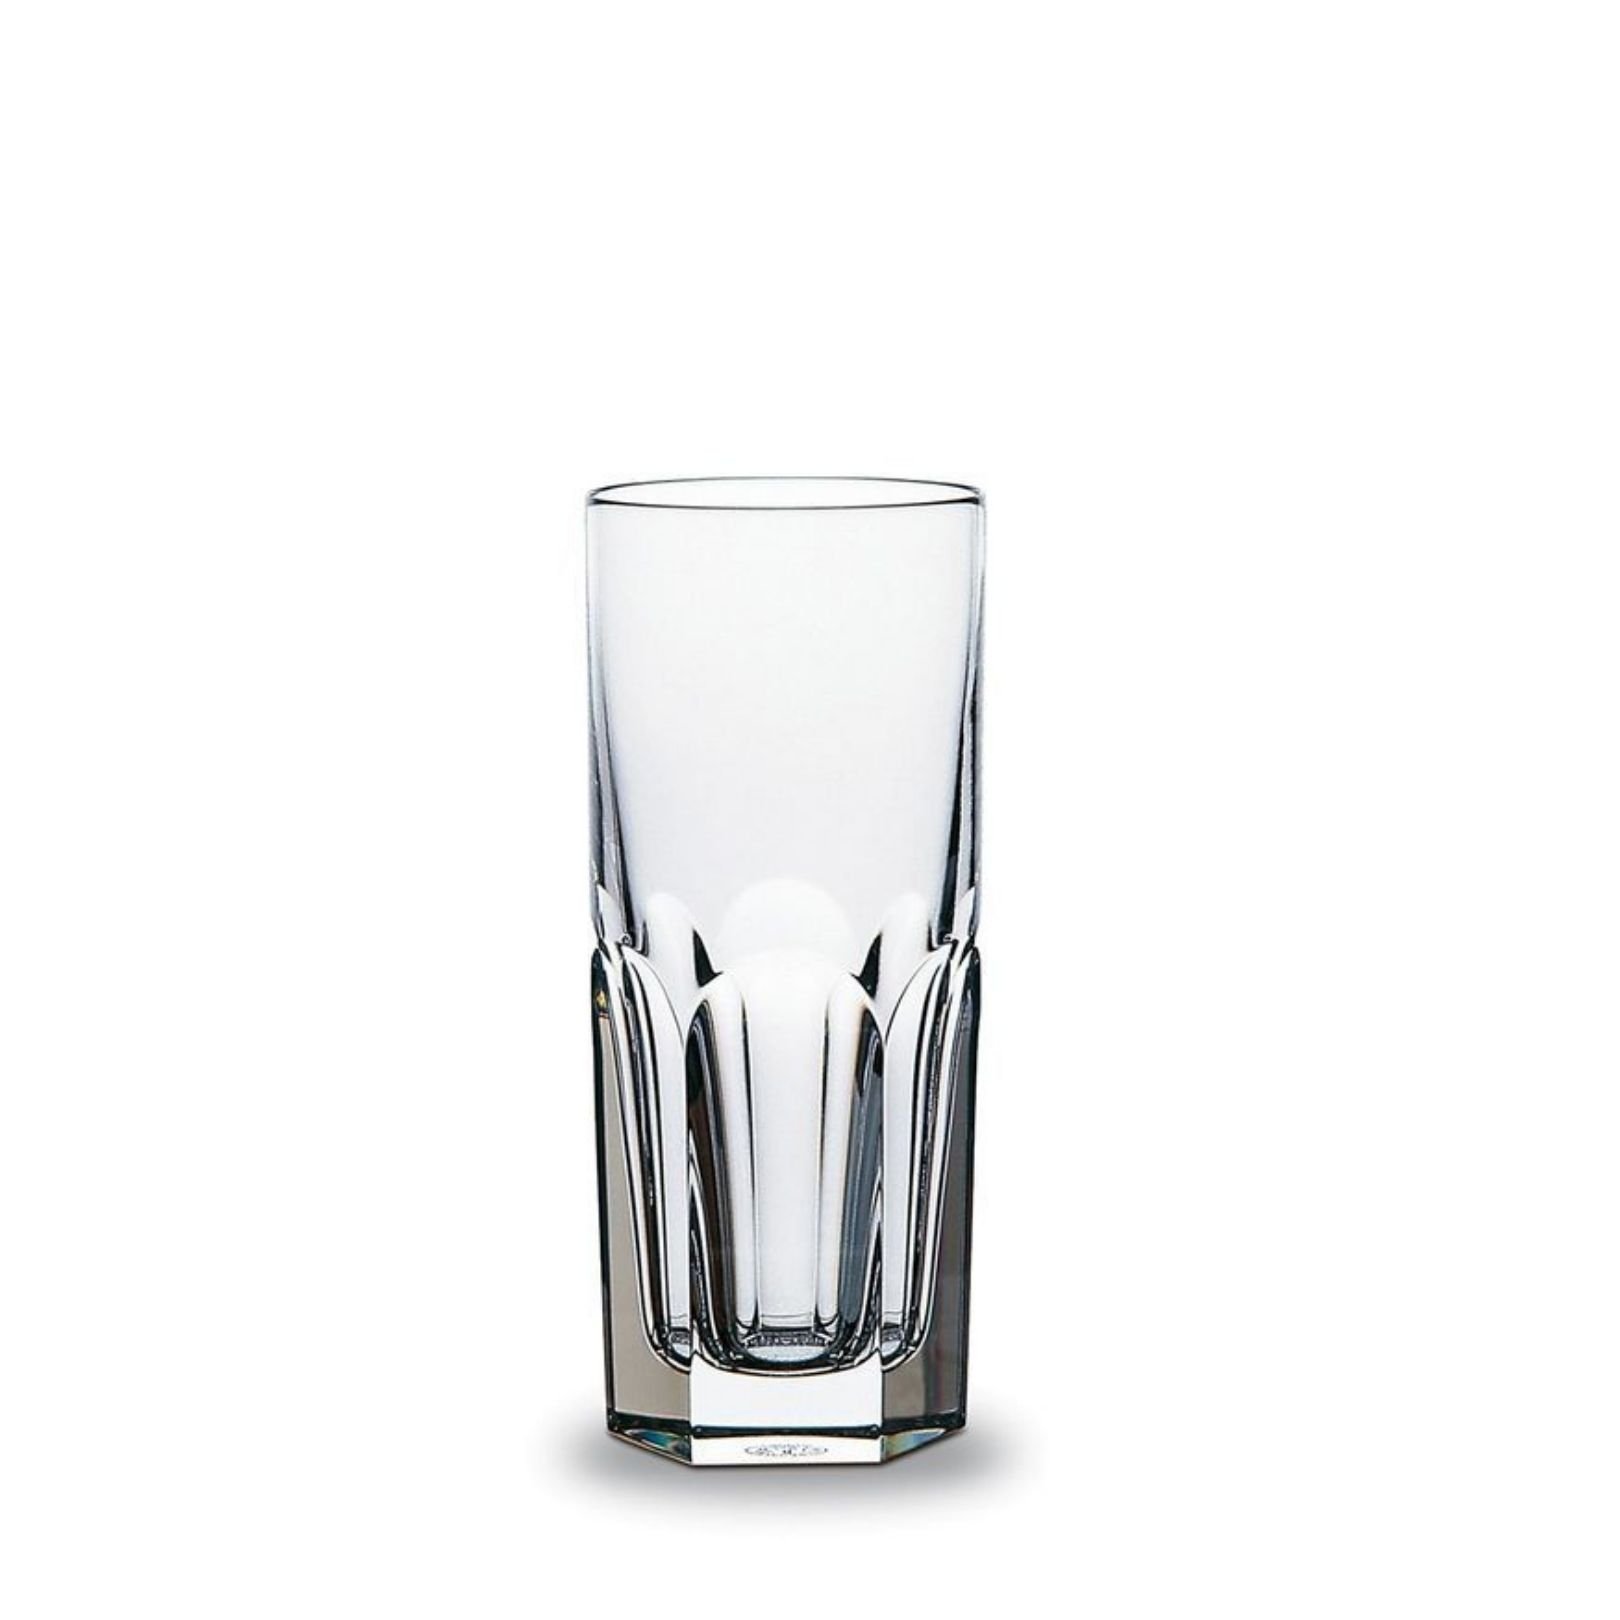 Glass sconto discount Happy Hour Harcourt cristallo Baccarat 2101923